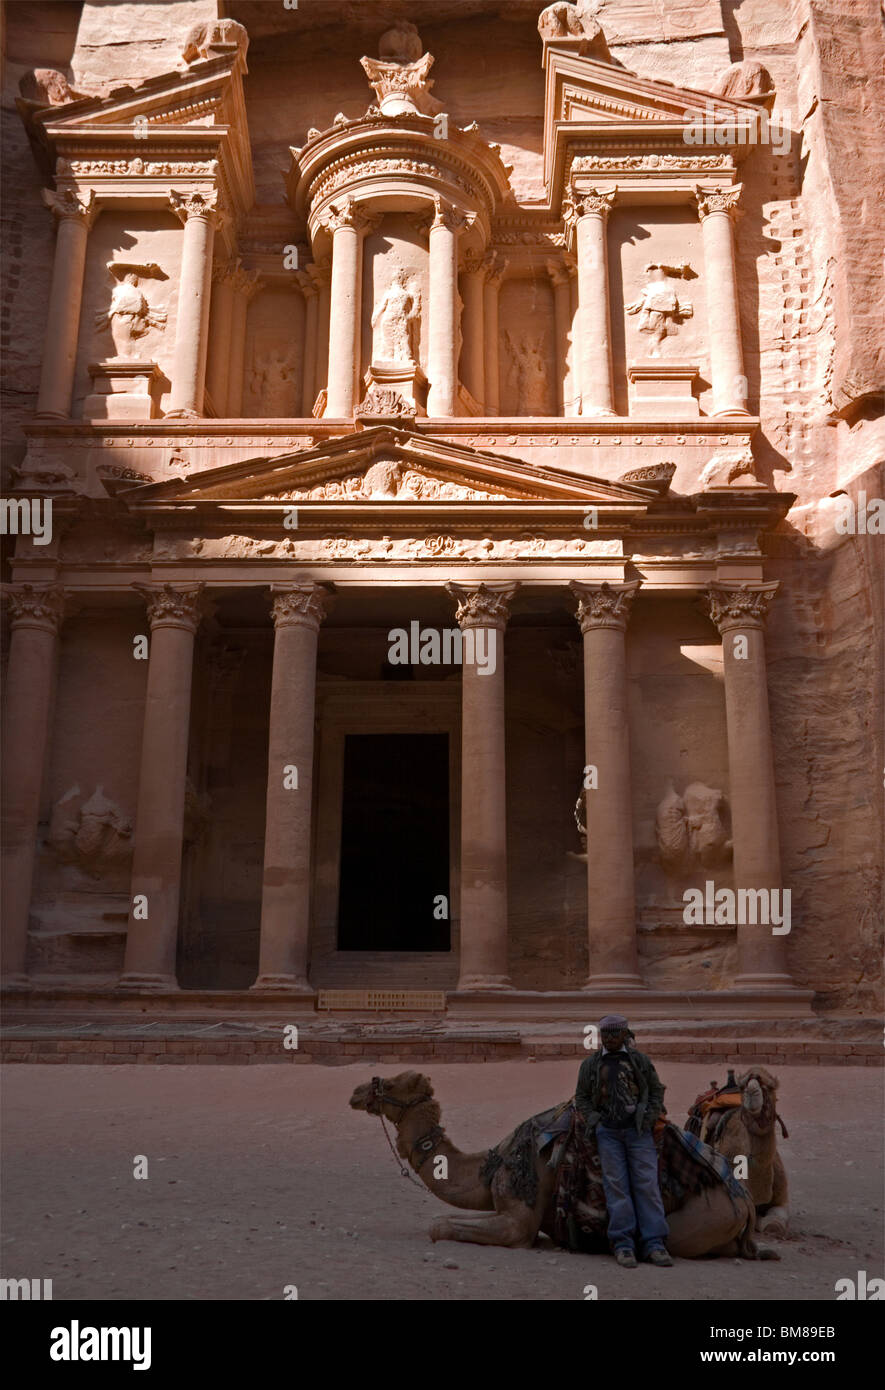 Treasury-Fassade mit einem Kamel in Front, in der alten rosaroten Stadt Petra Jordan Stockfoto